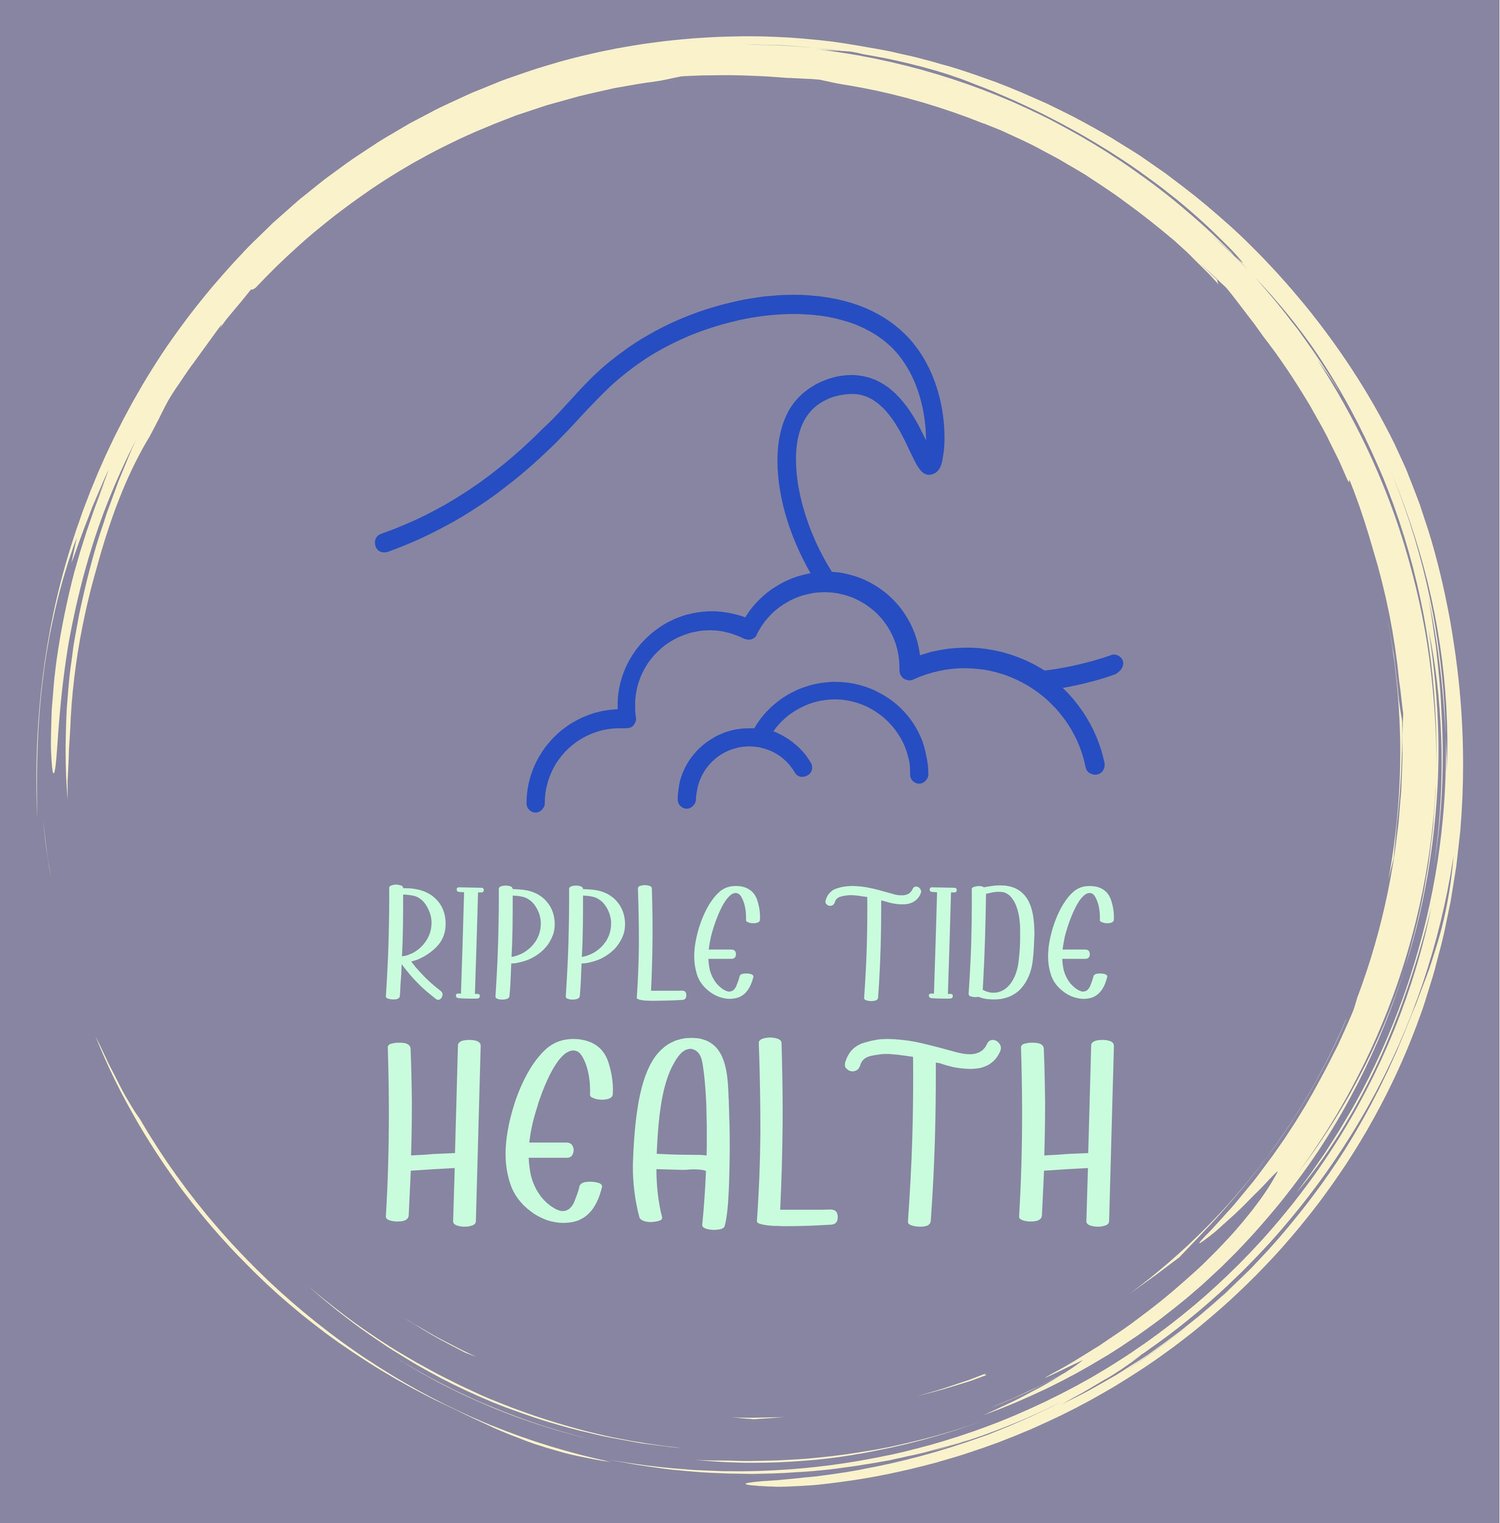 Ripple Tide Health